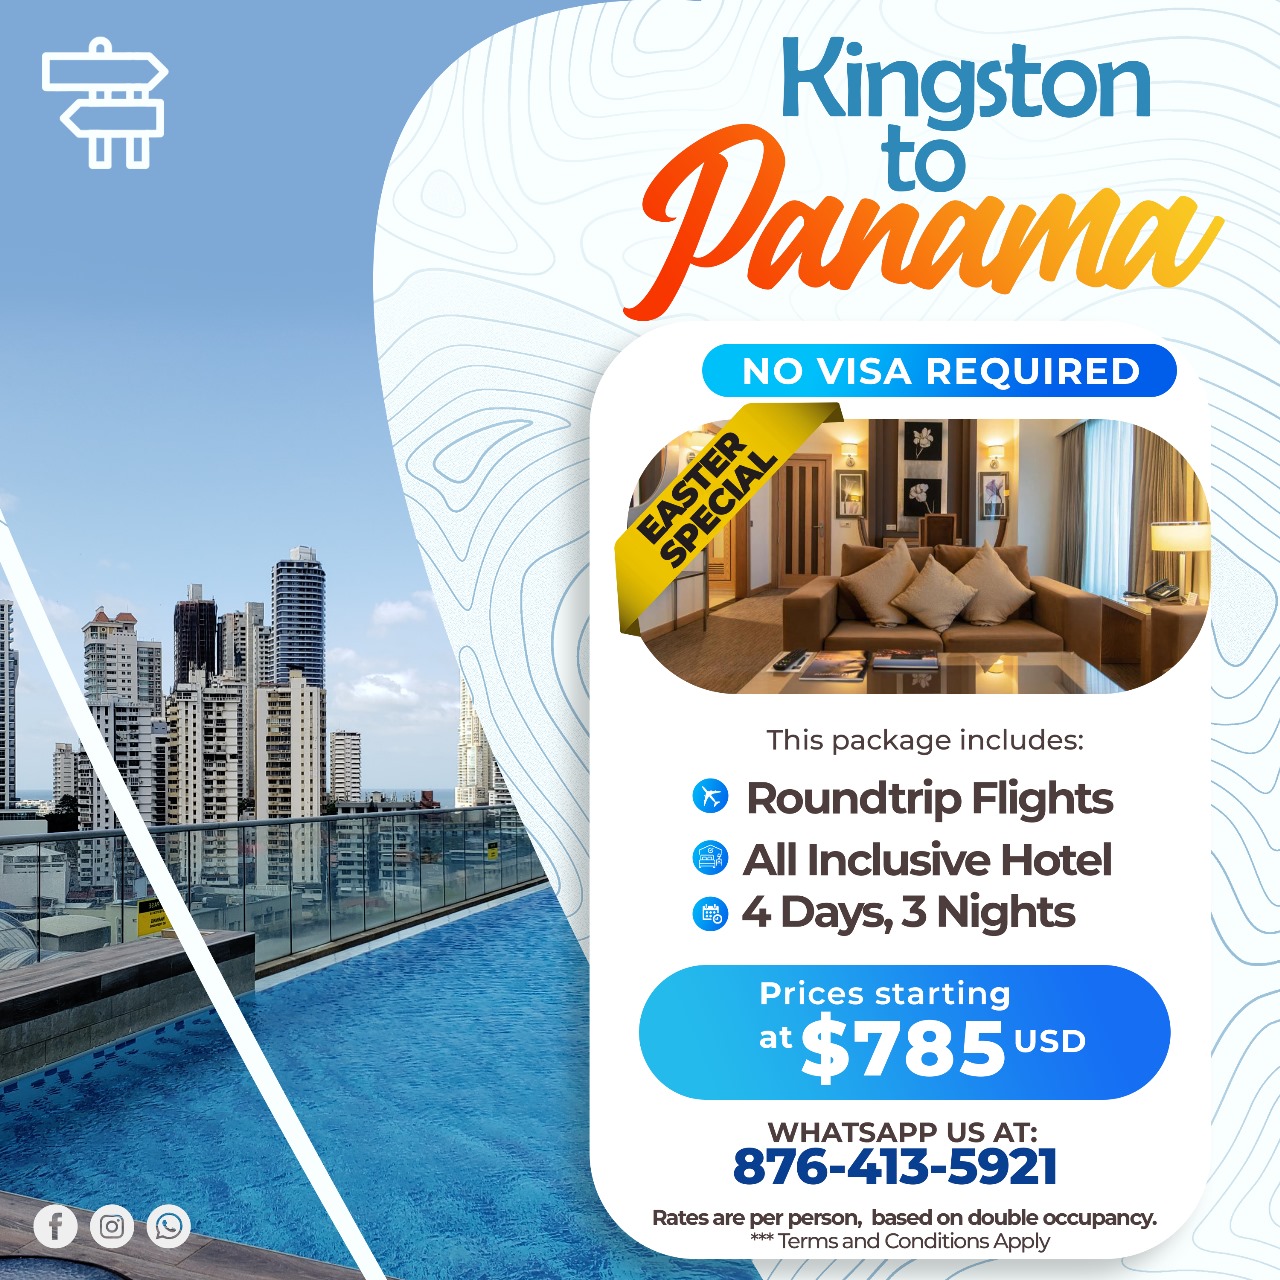 Kingston to Panama Package